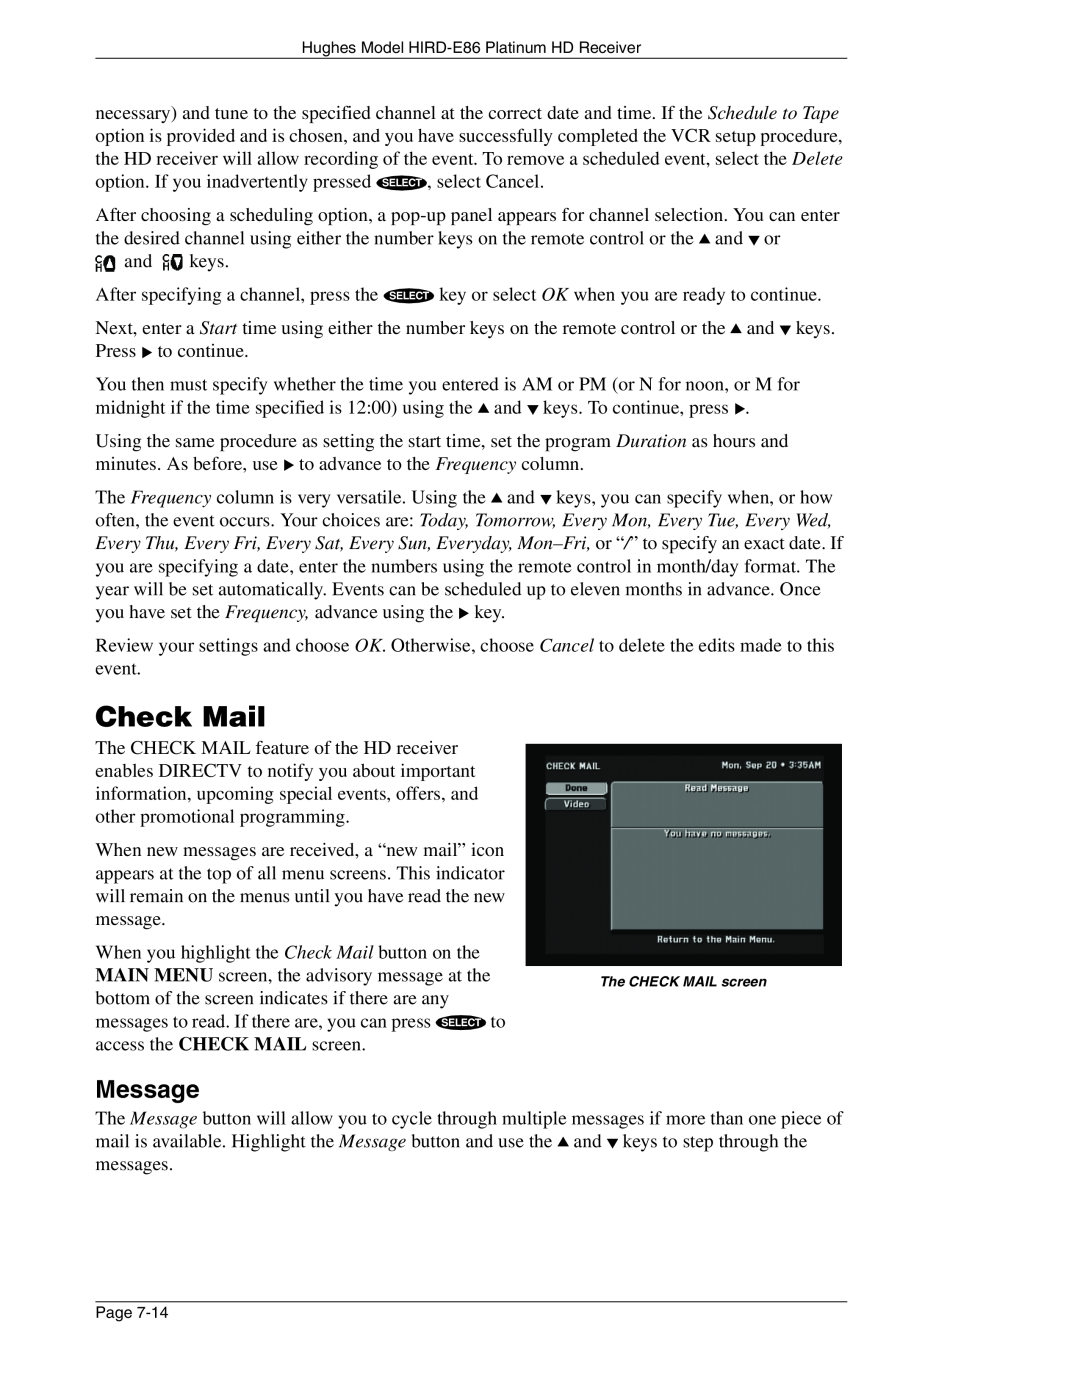 DirecTV HIRD-E86 manual Check Mail, Message 